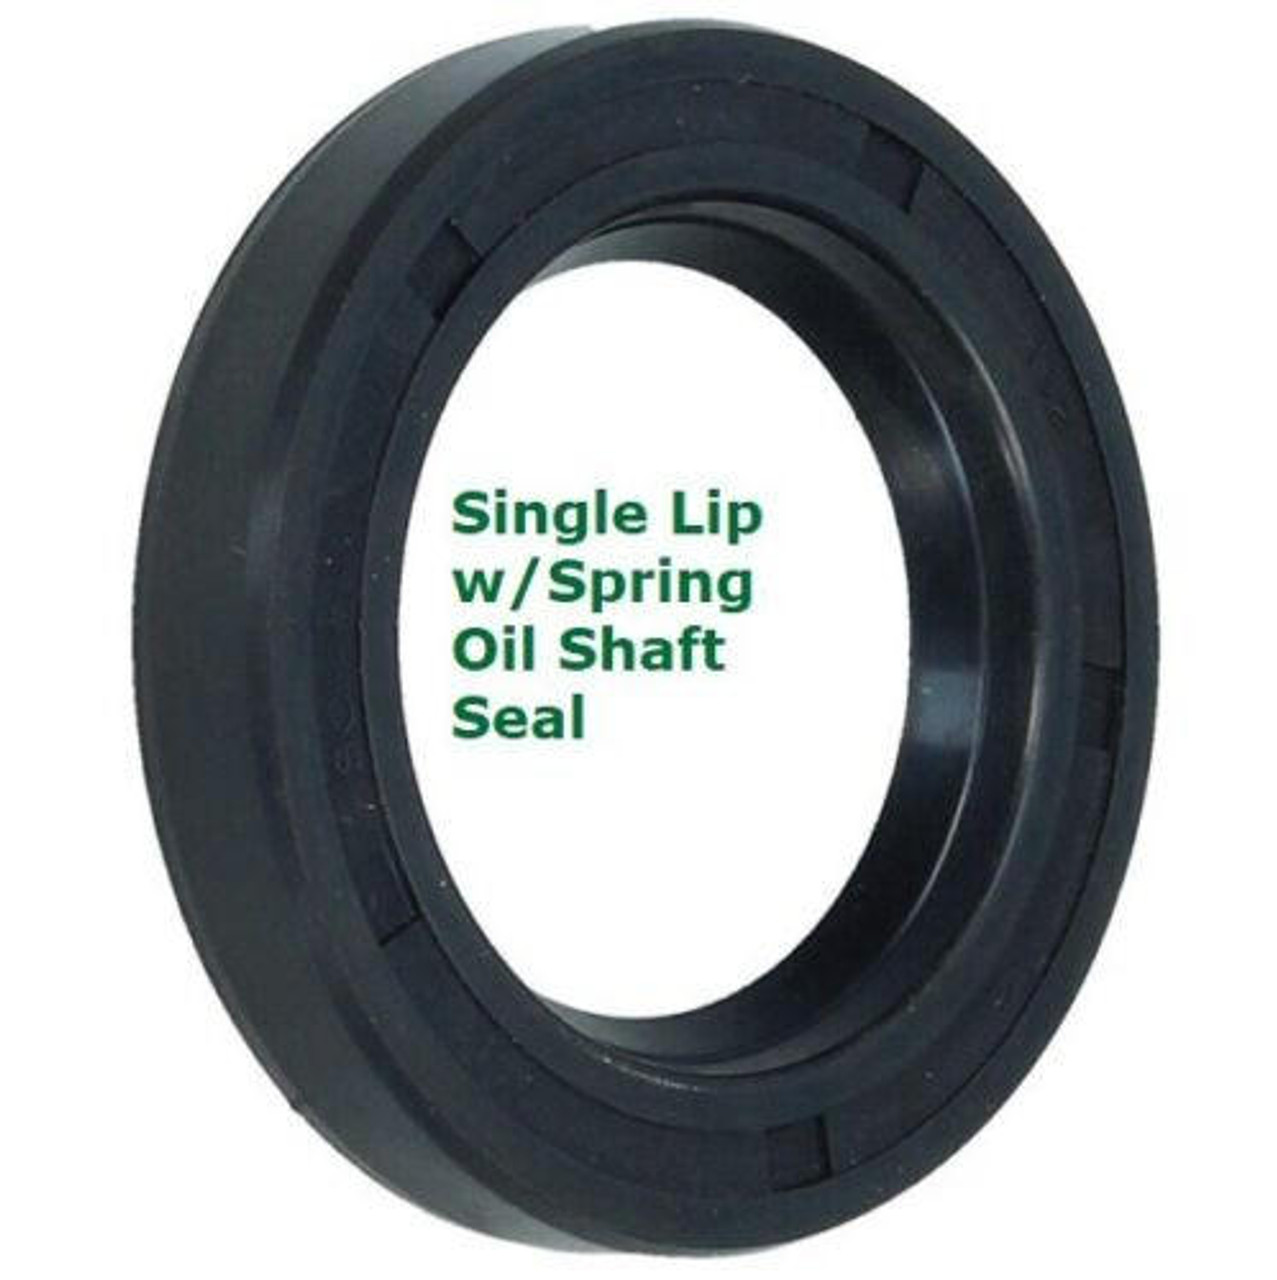 Metric Oil Shaft Seal 40 x 62 x 10mm Single Lip   Price for 1 pc